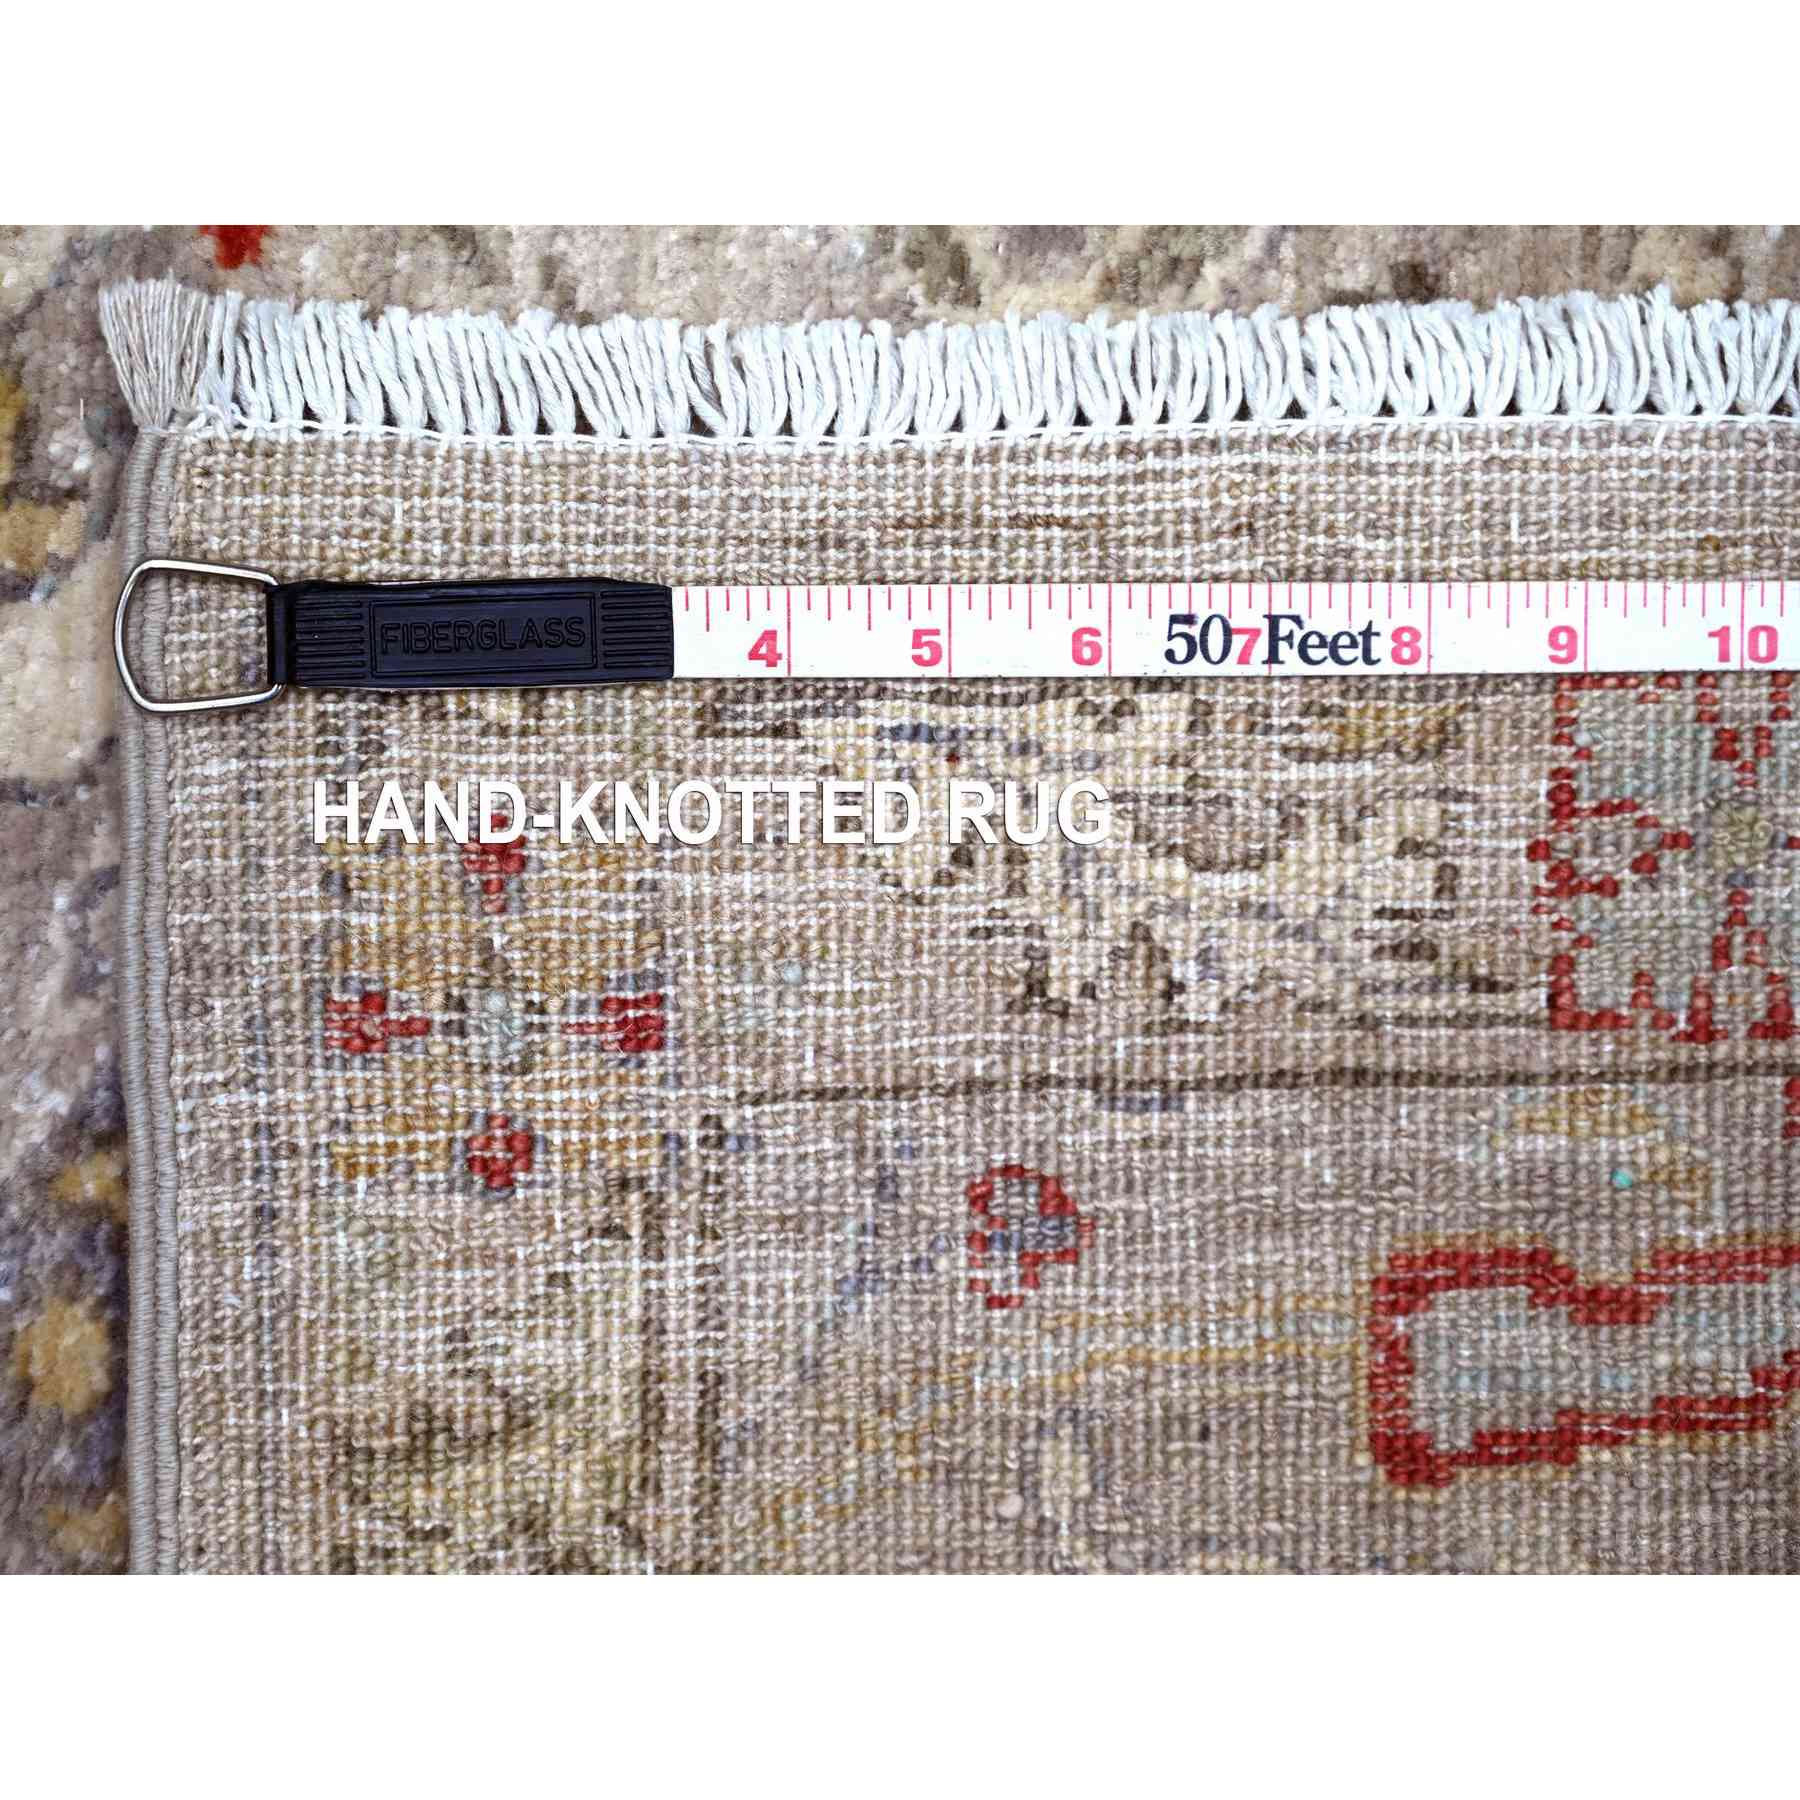 Mamluk-Hand-Knotted-Rug-441660